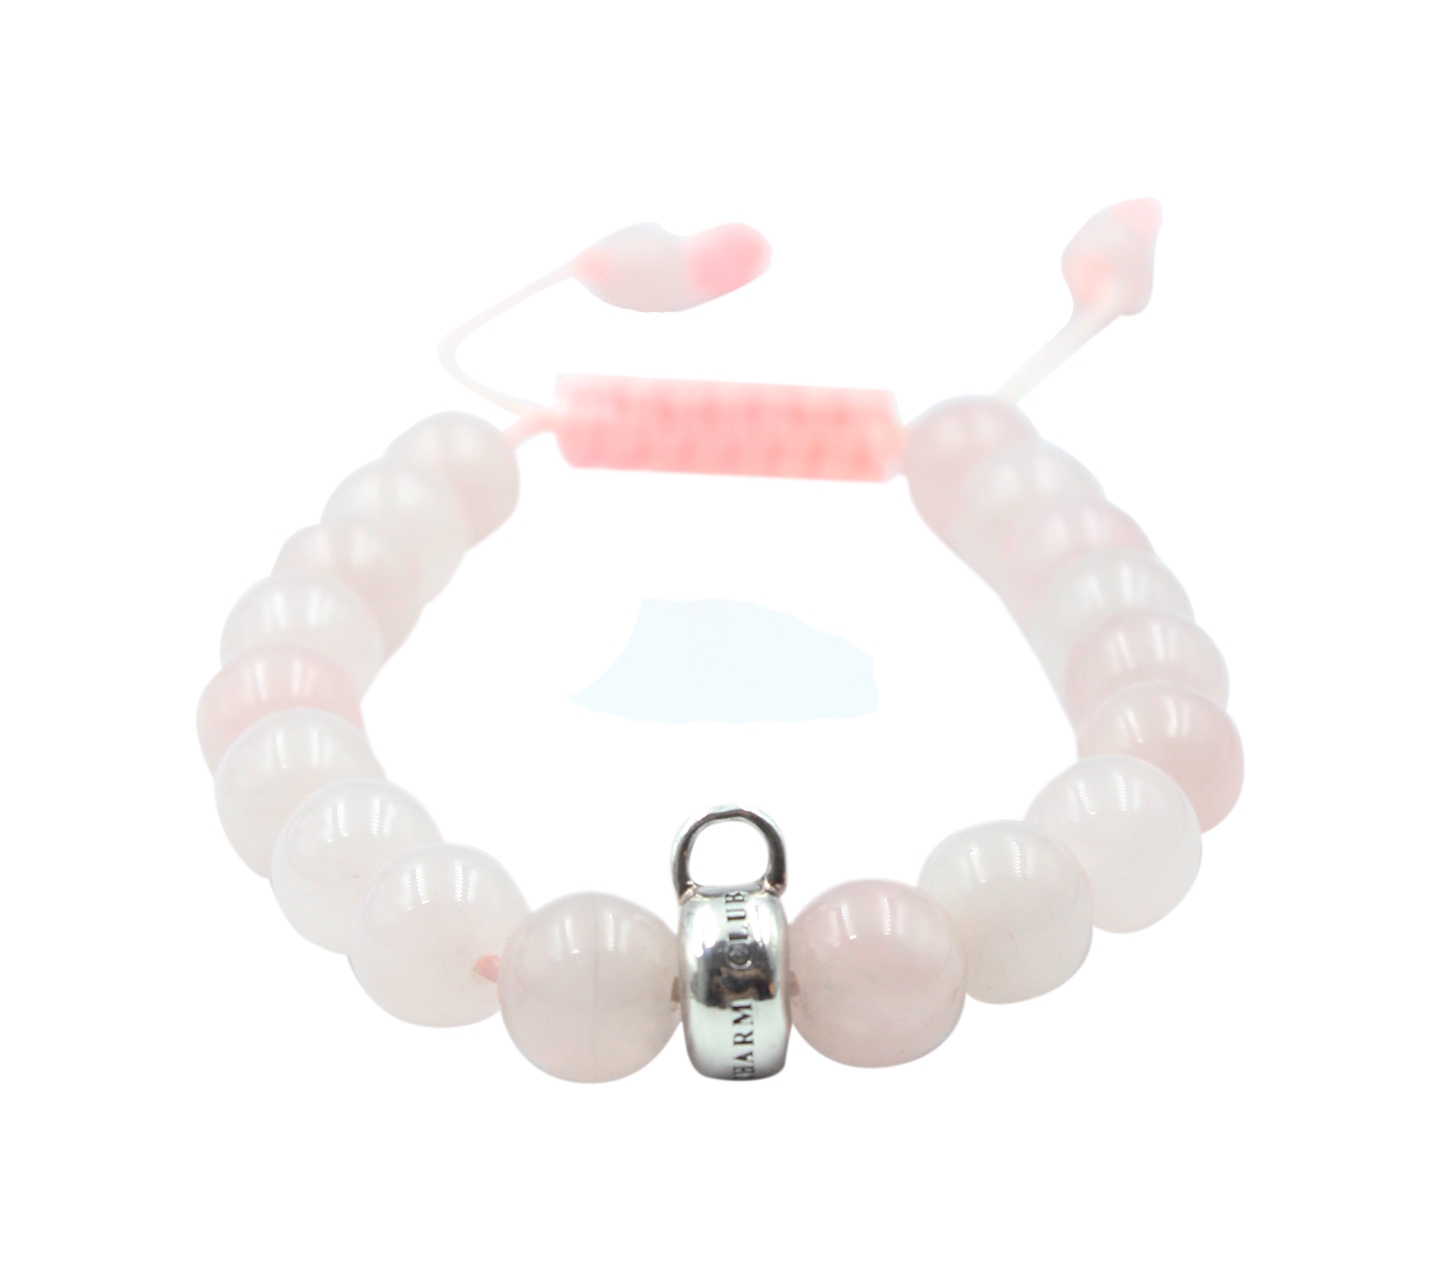 Thomas Sabo Pink Bracelet Jewelry